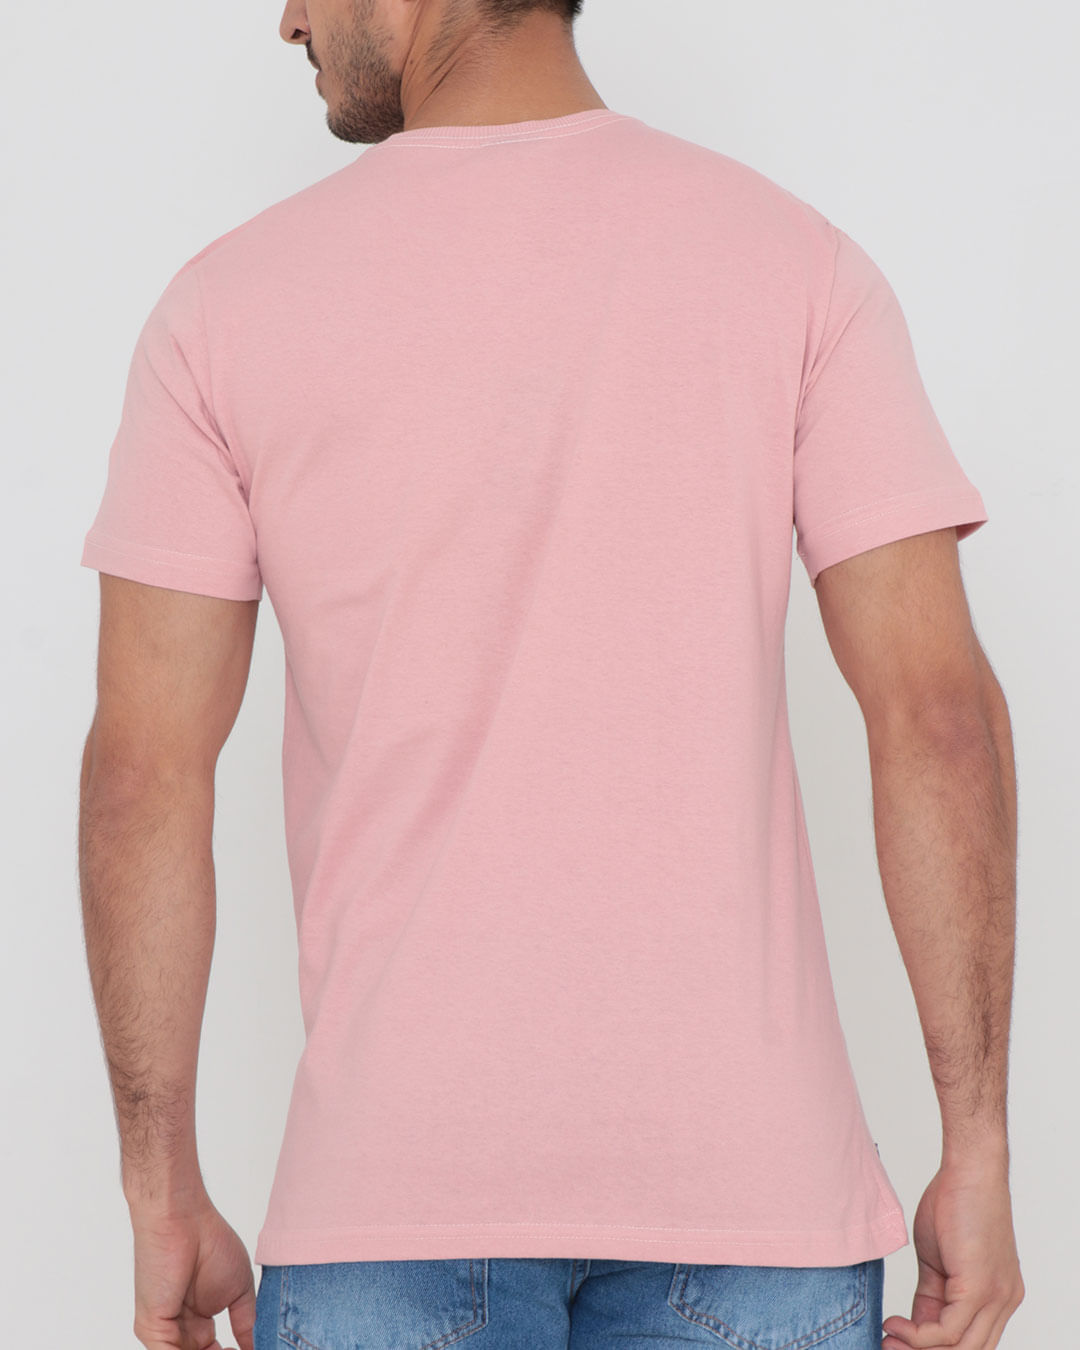 Camiseta-Estampa-Frontal-Ecko-Unlimited-Rosa